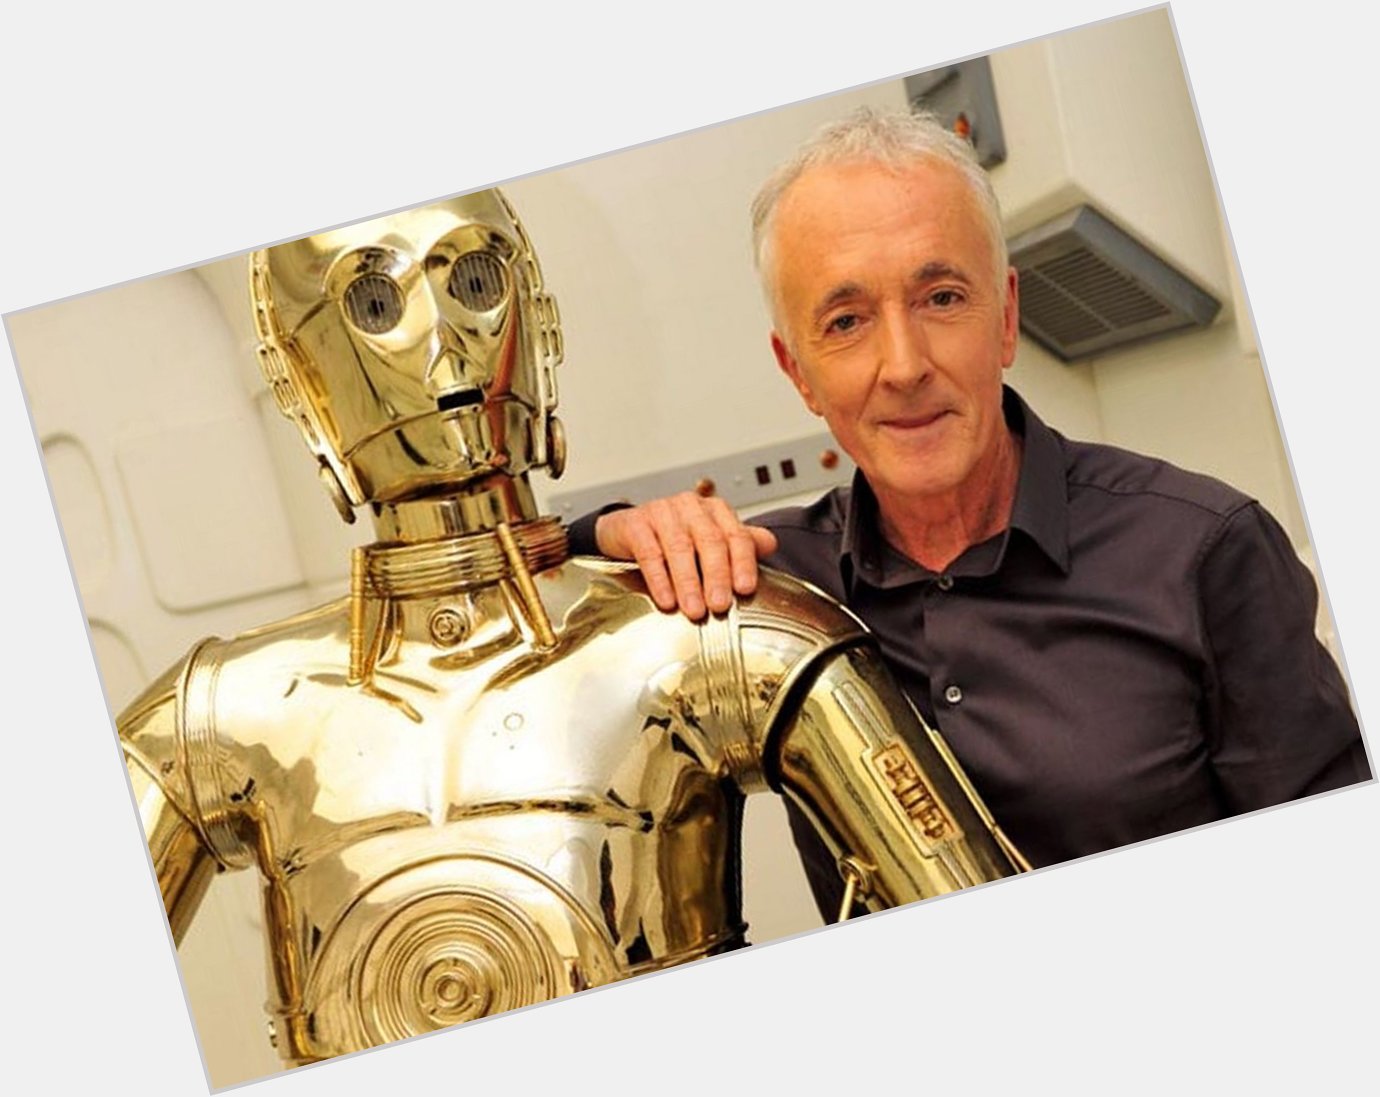 Happy Birthday Anthony Daniels! We love you C-3PO! 